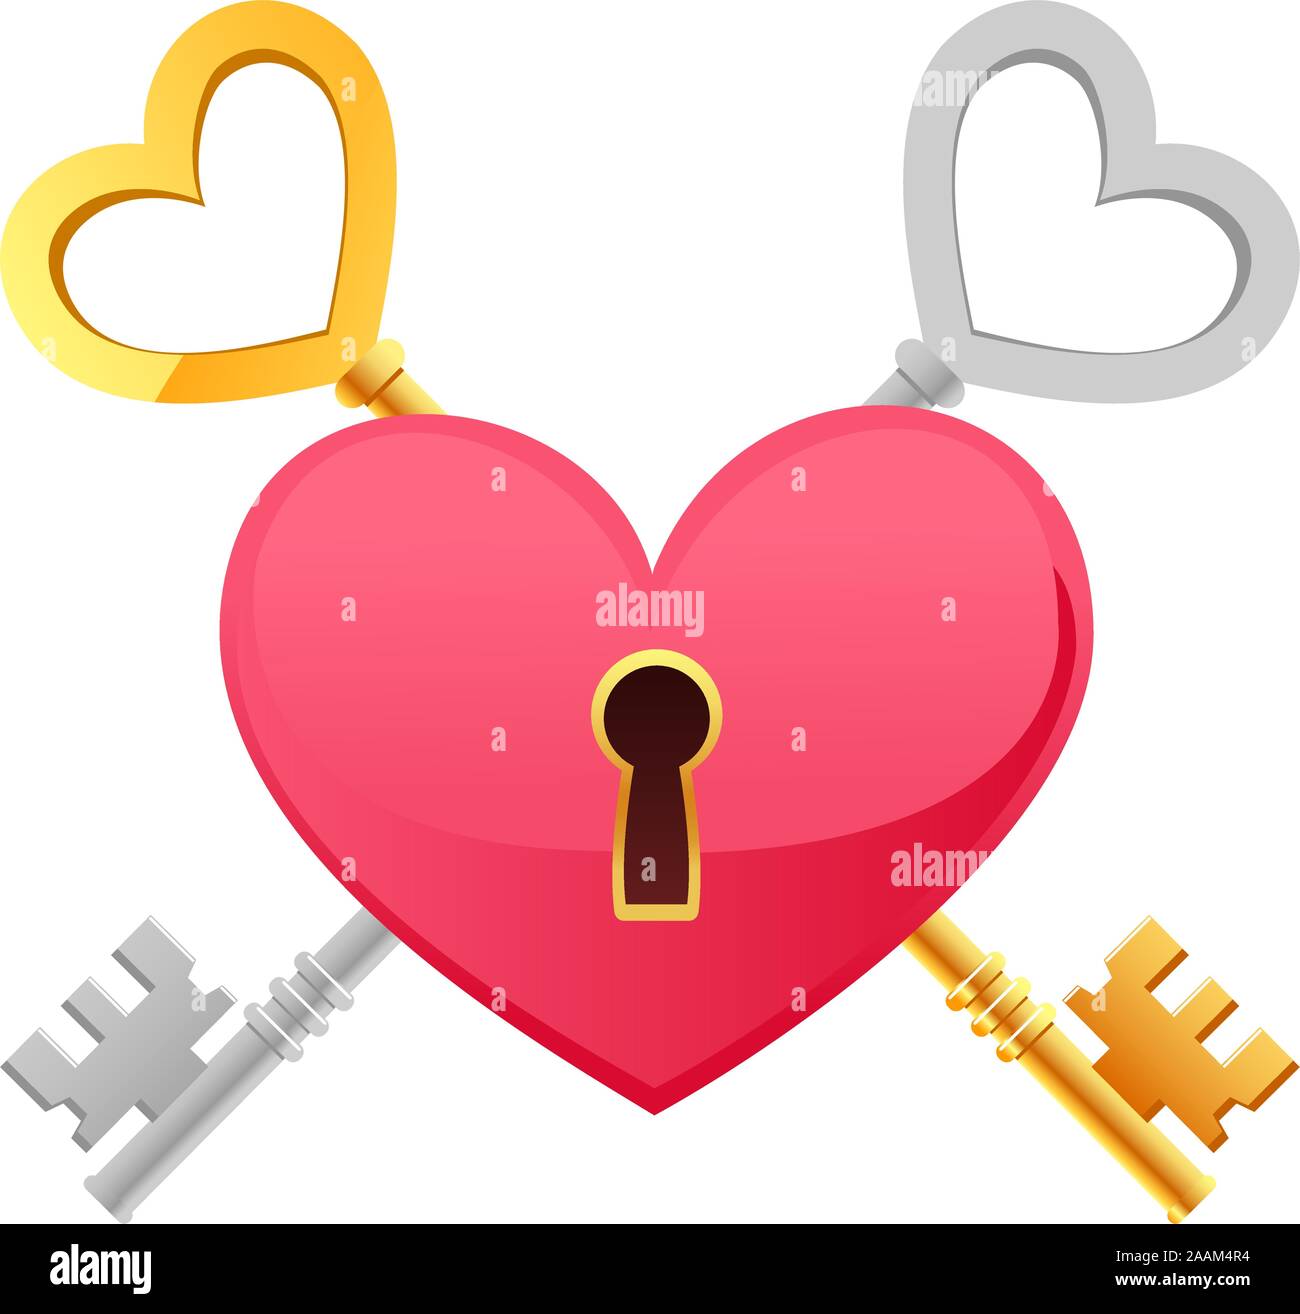 Skeleton Keys Gold Silver Heart Shape with keypath. The key to my heart vector illustration cartoon. Stock Vector